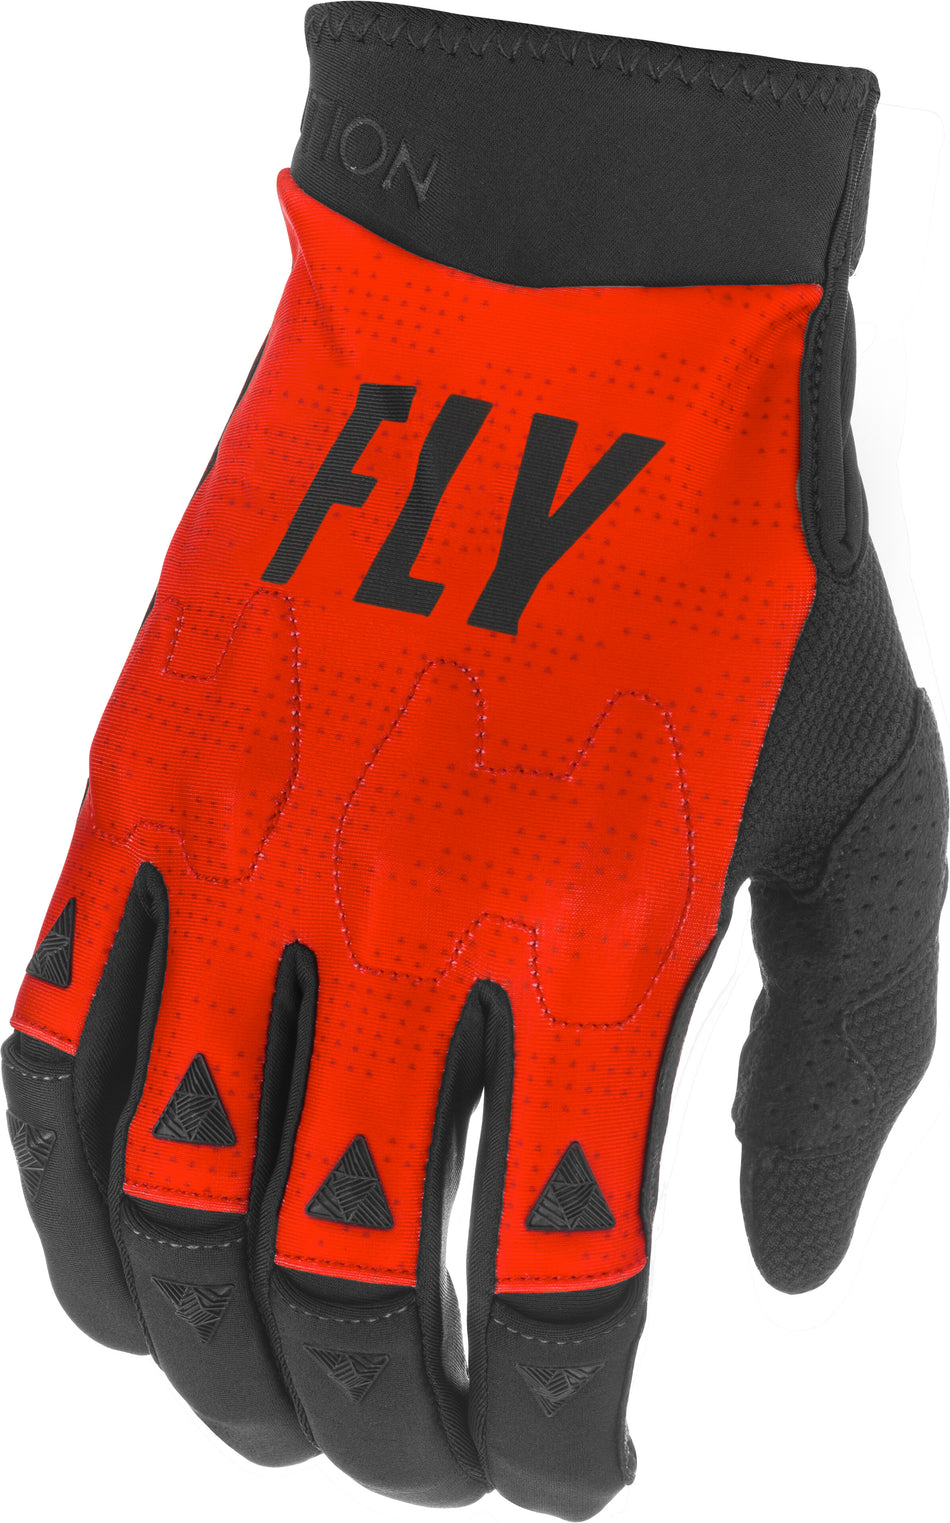 FLY RACING Evolution Dst Gloves Red/Black/White Sz 12 374-11212